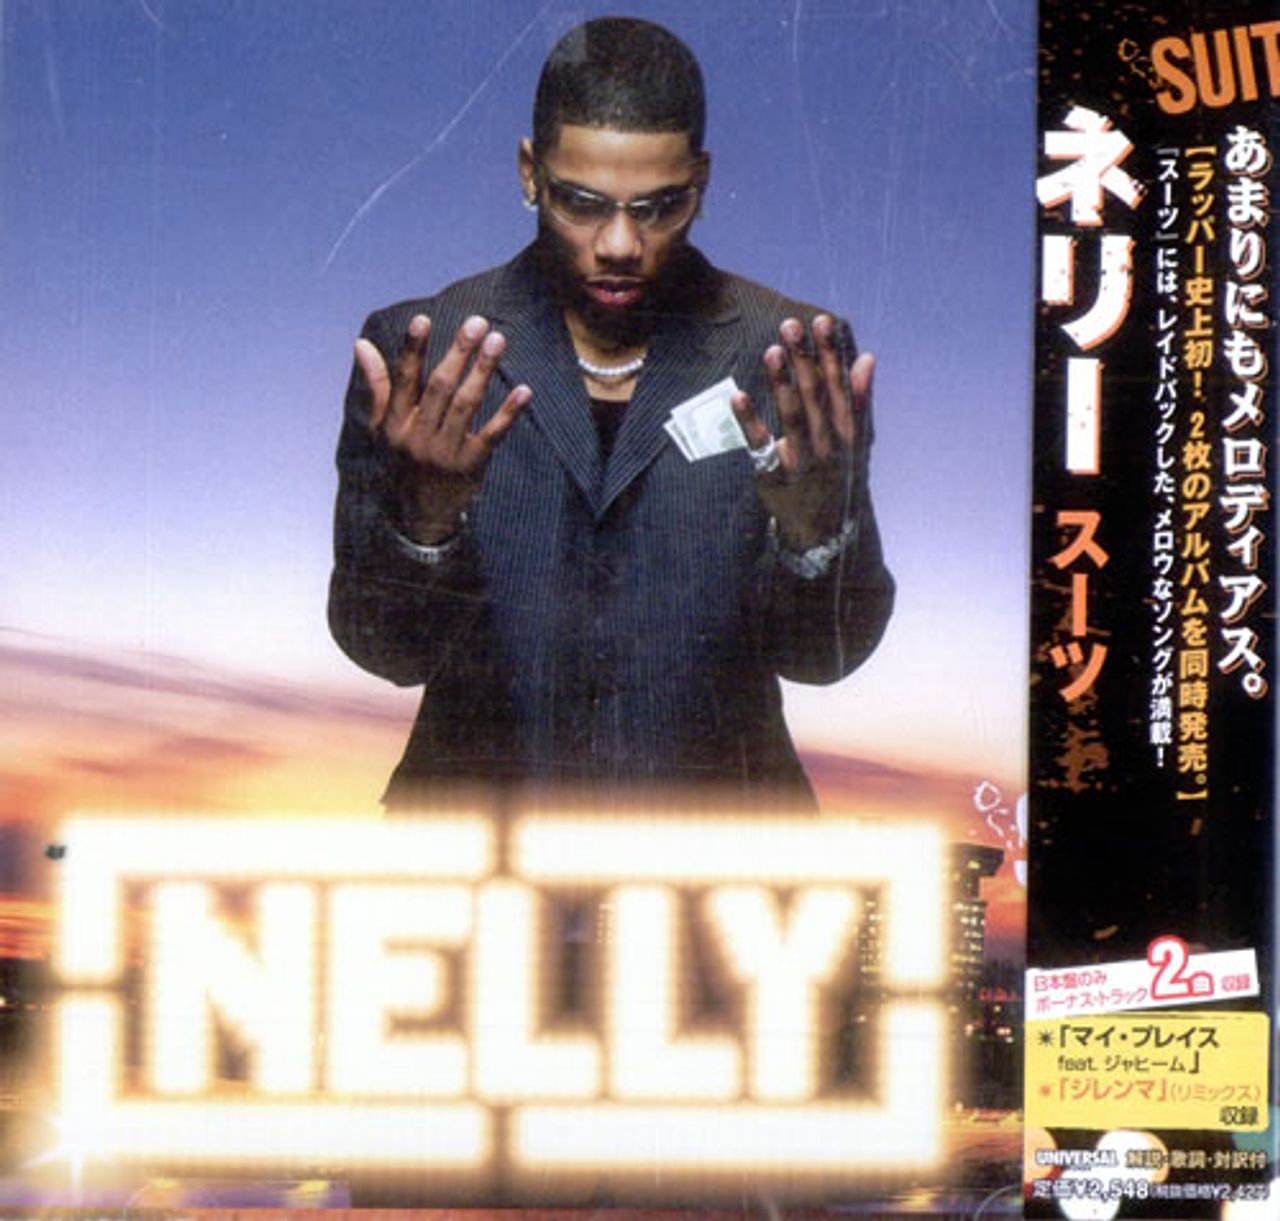 Nelly Suit Japanese Promo CD album